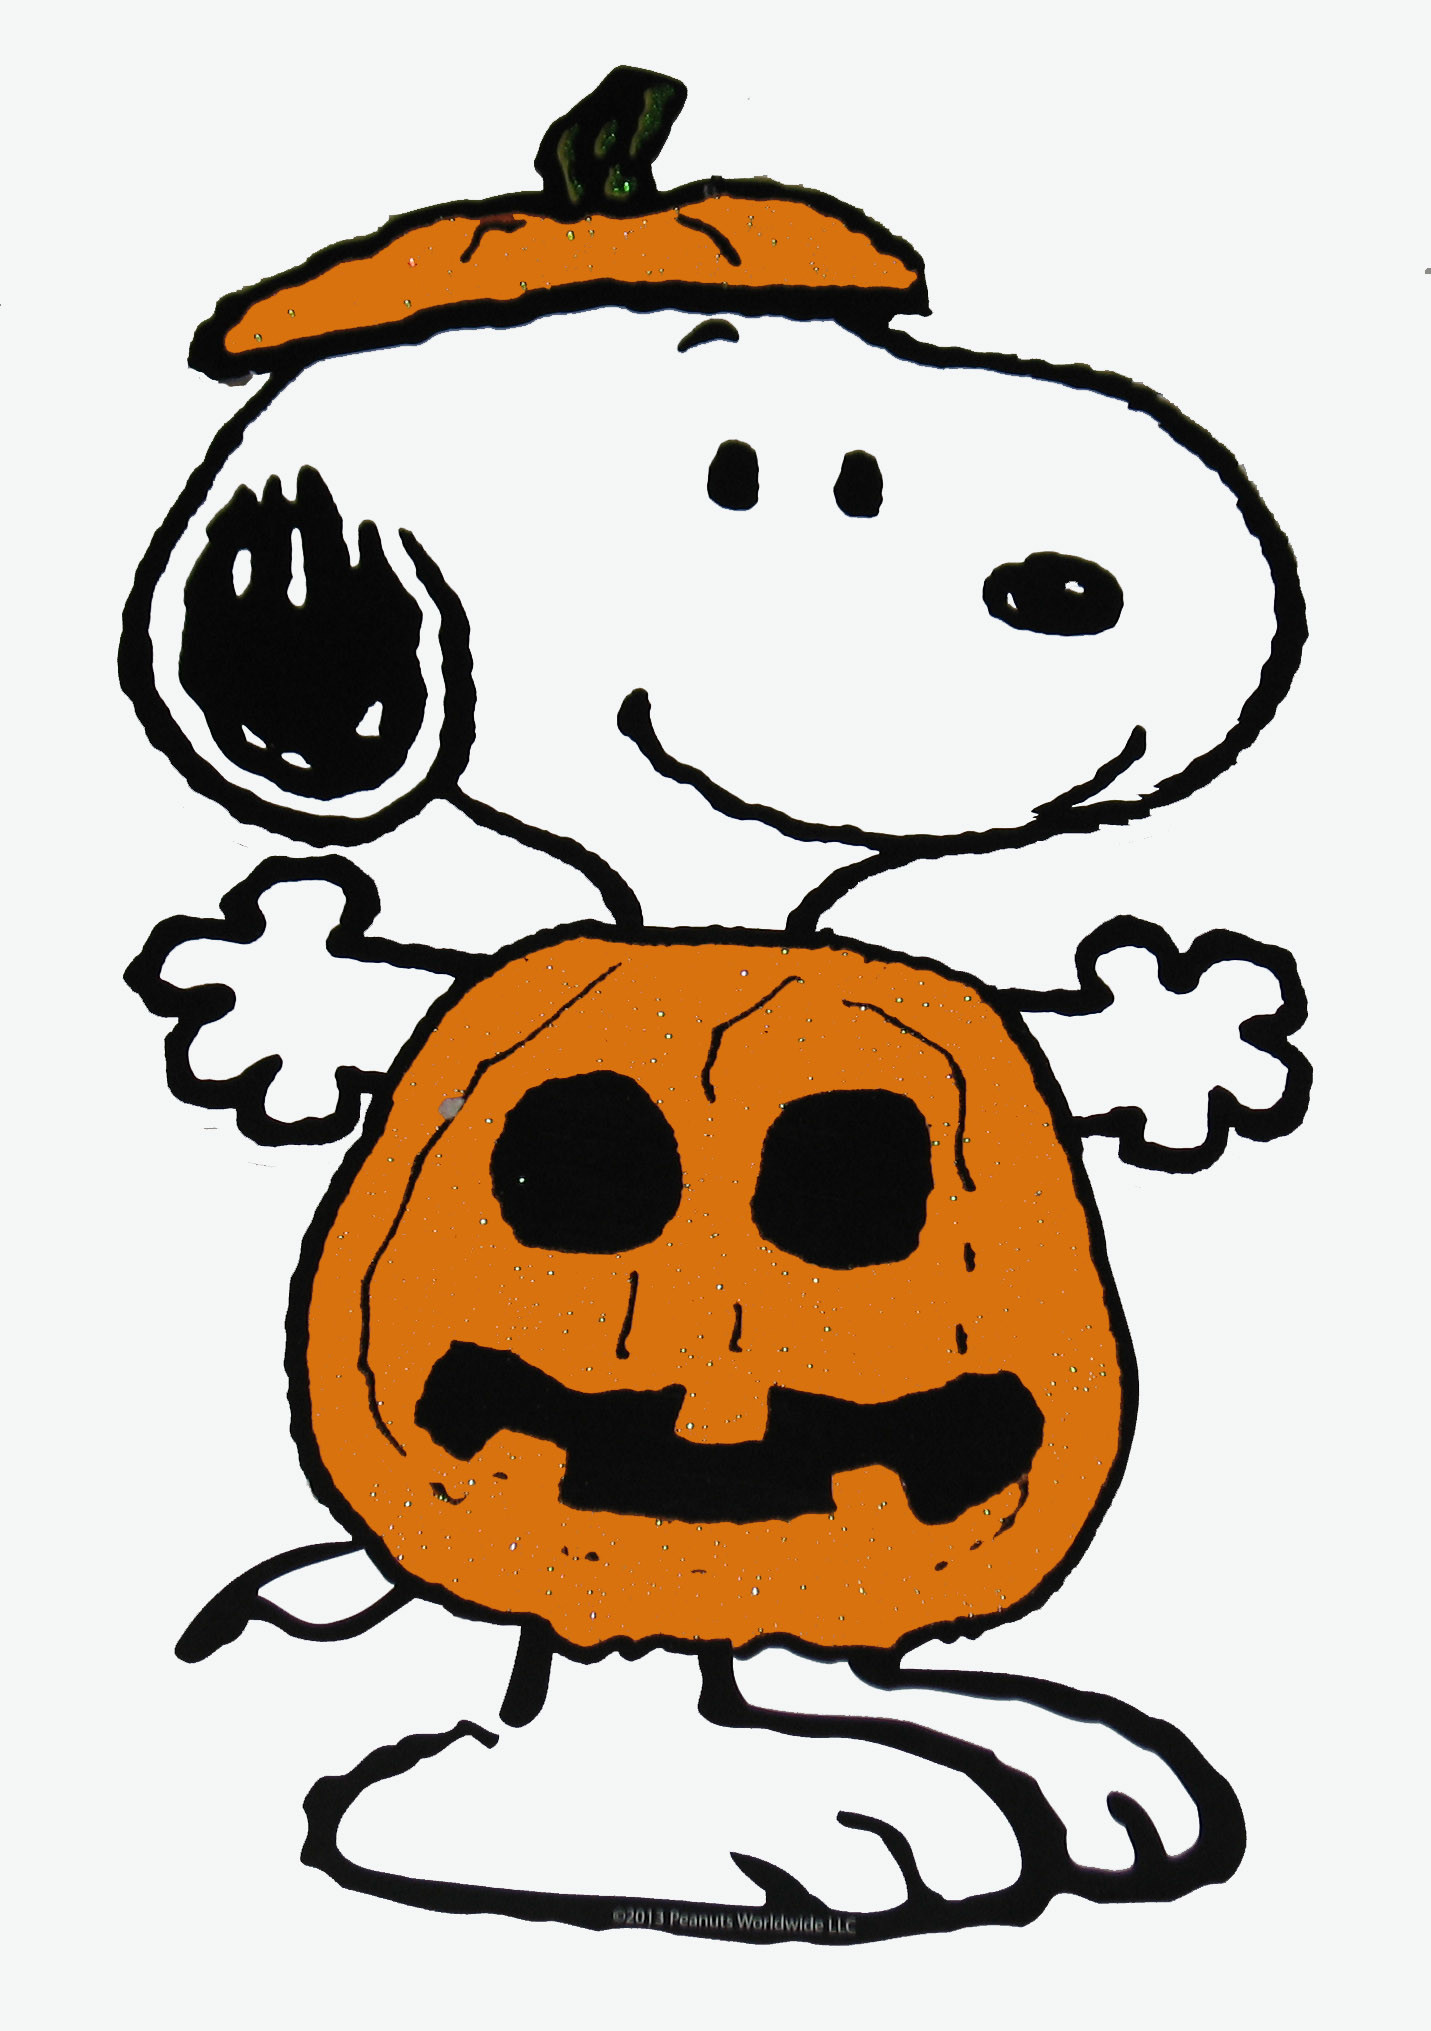 1431x2031 Peanuts Gang Sparkling Halloween Die-Cut Wall Decor - Snoopy .